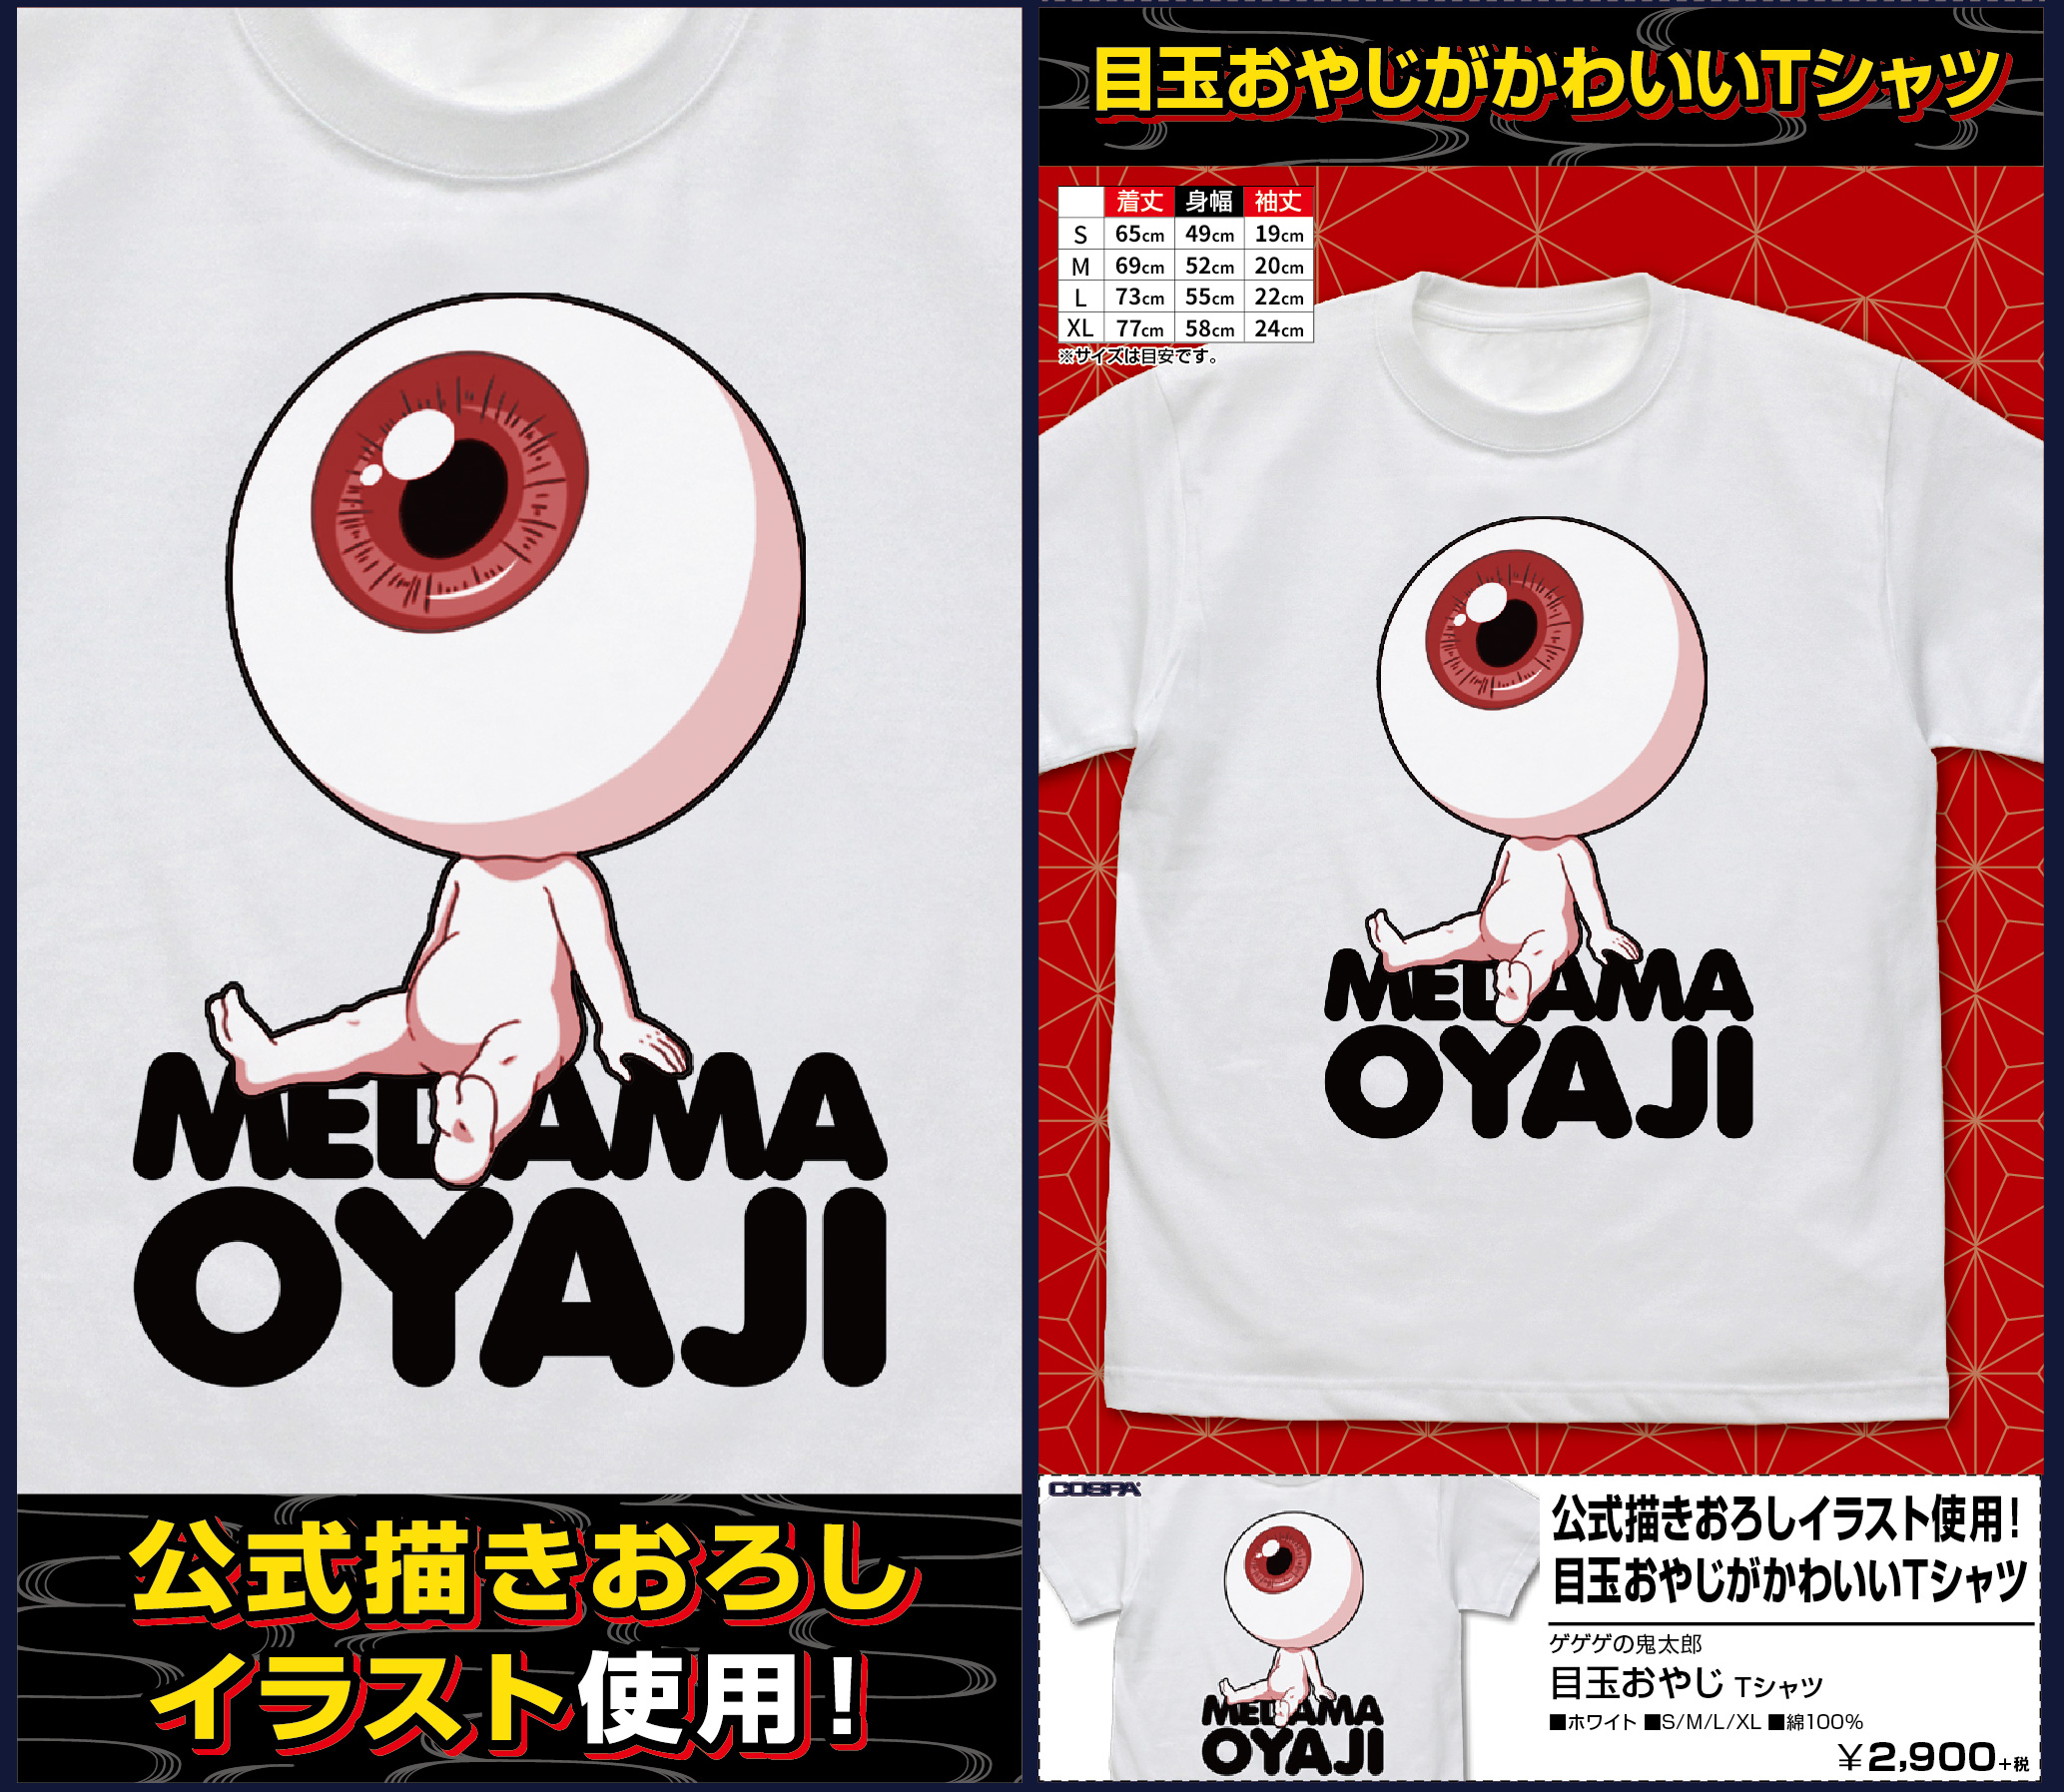 Gegege No Kitaro Medama Oyaji T Shirt Milestone Inc Group Set Product Detail Information